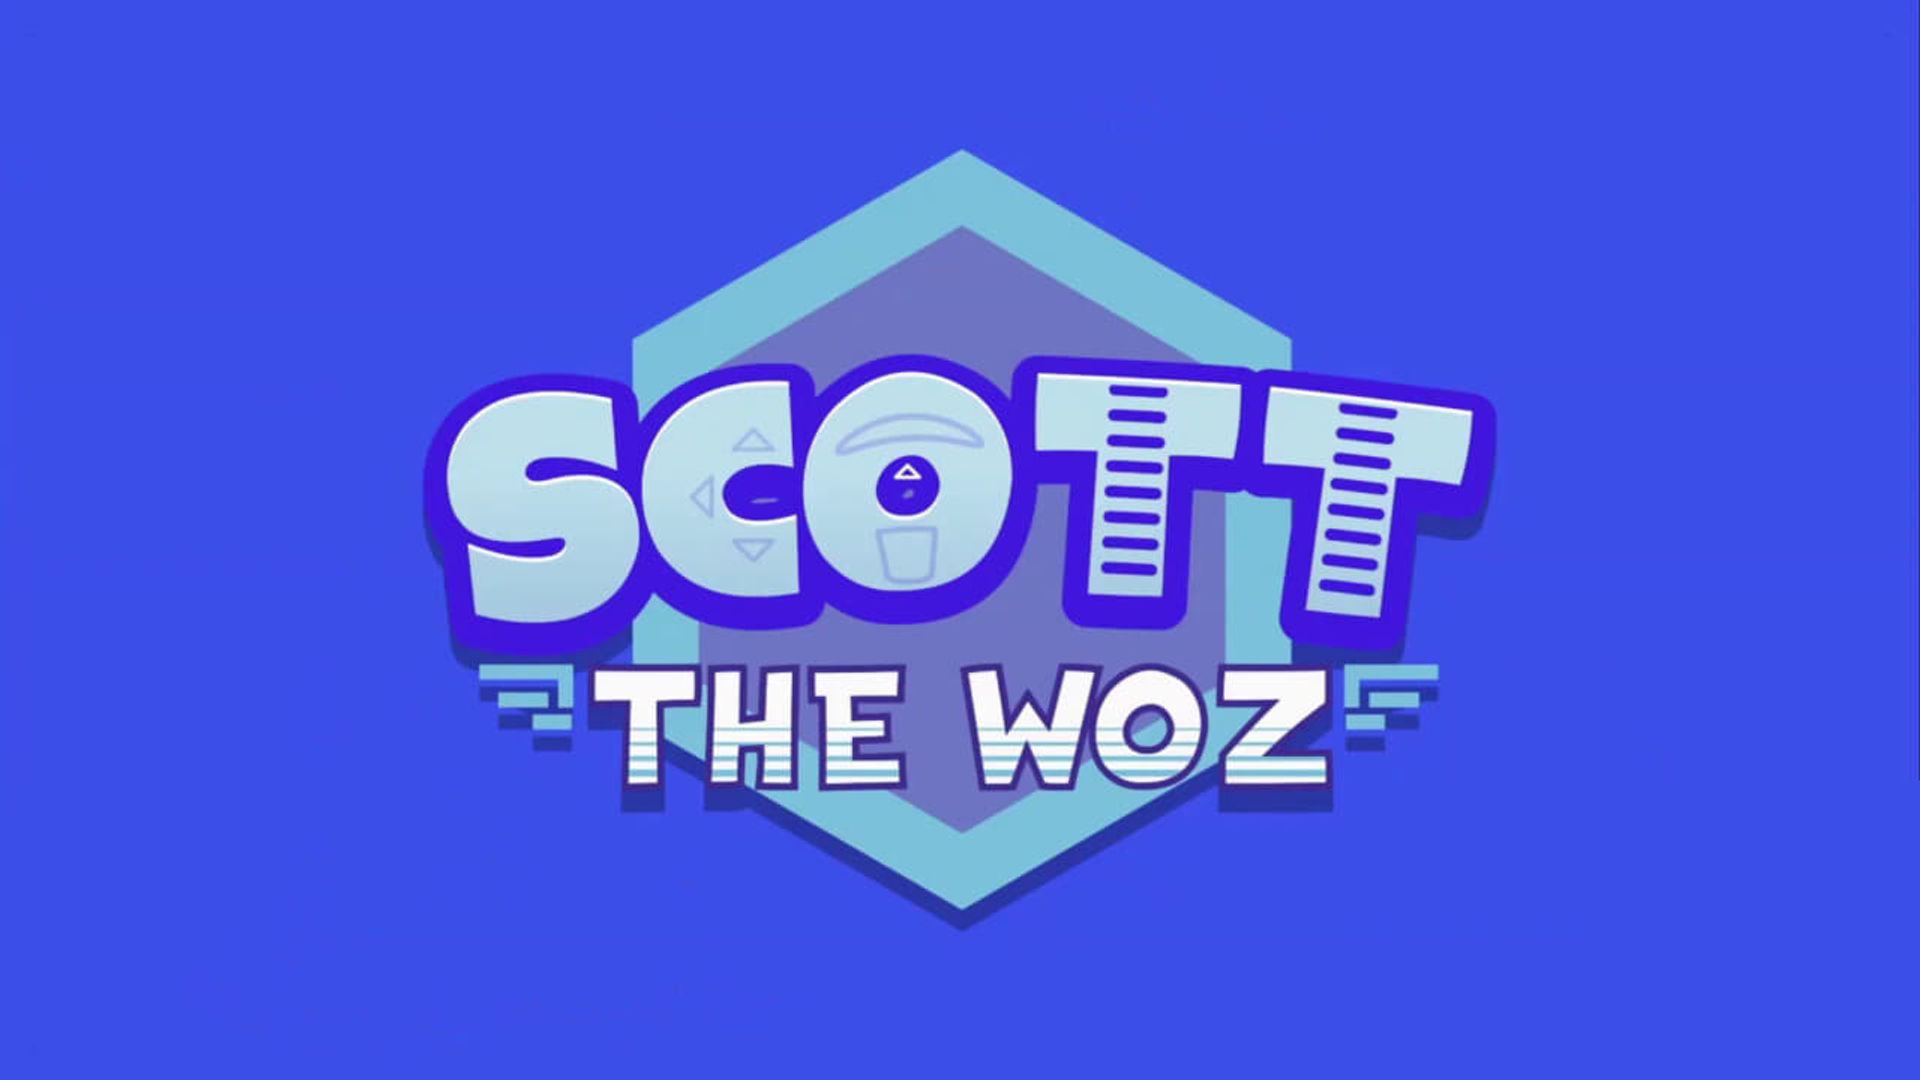 Scott the Woz background